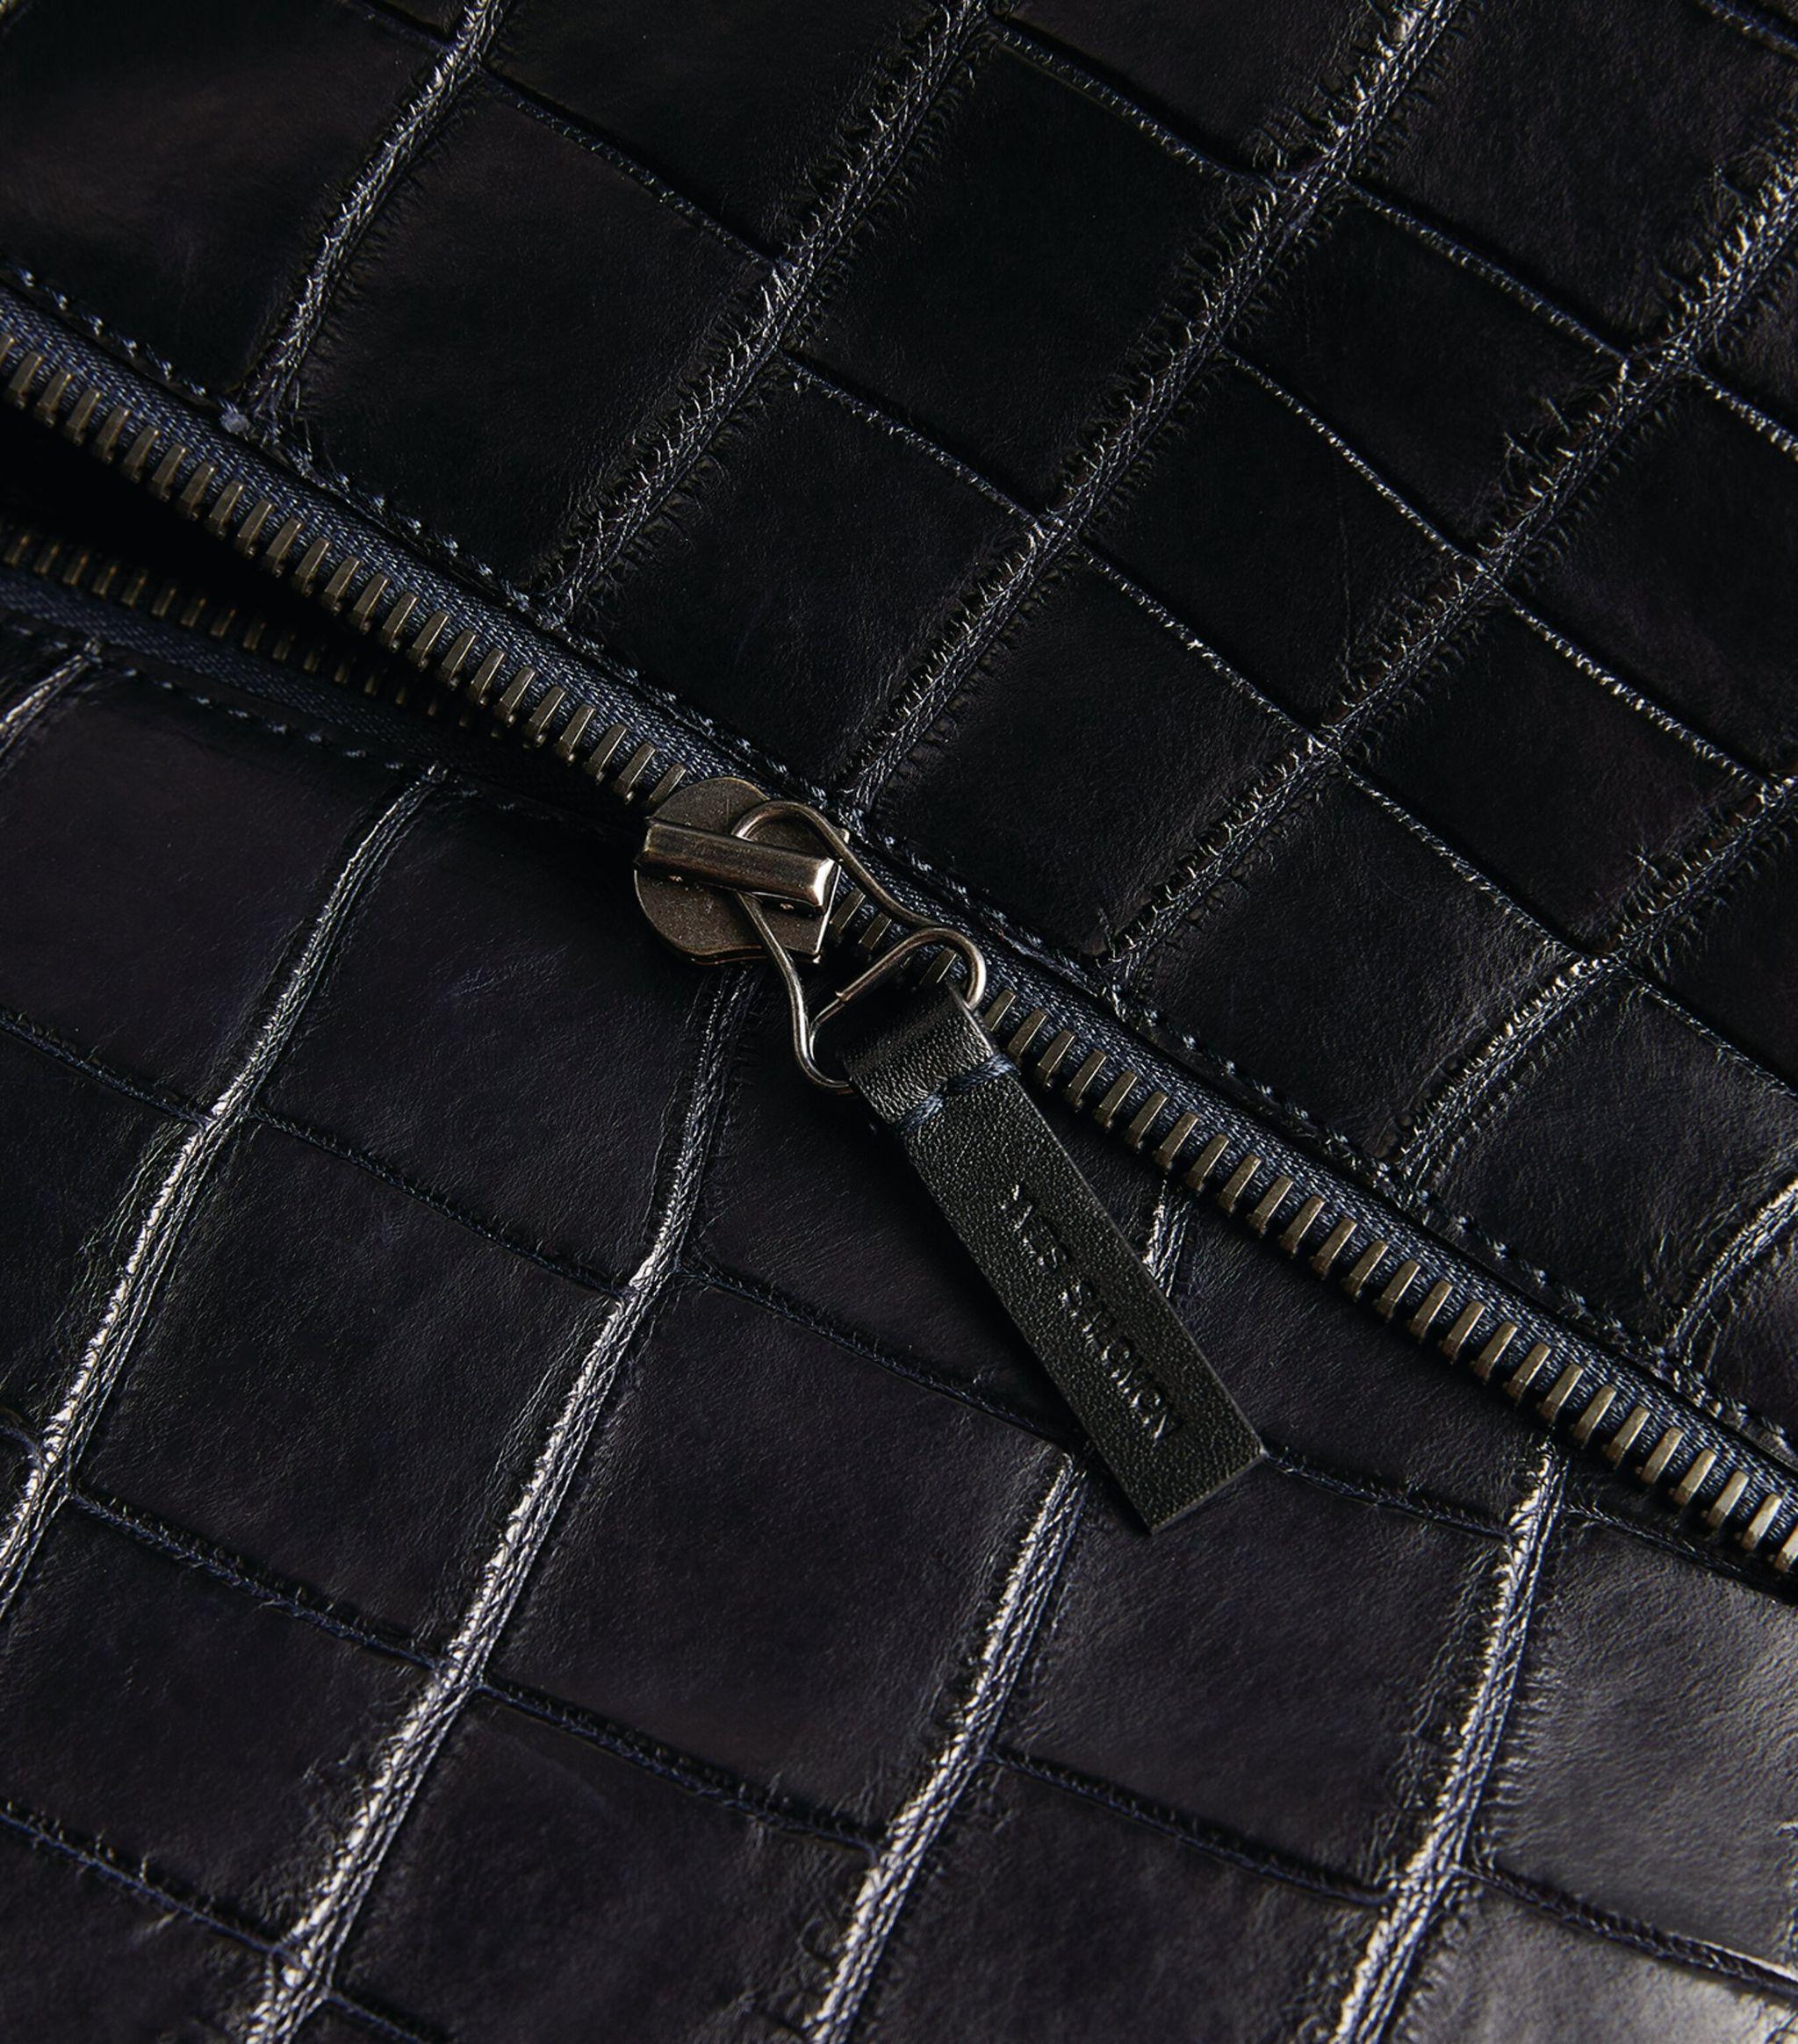 Crocodile Print Men's Lambskin Leather Jacket